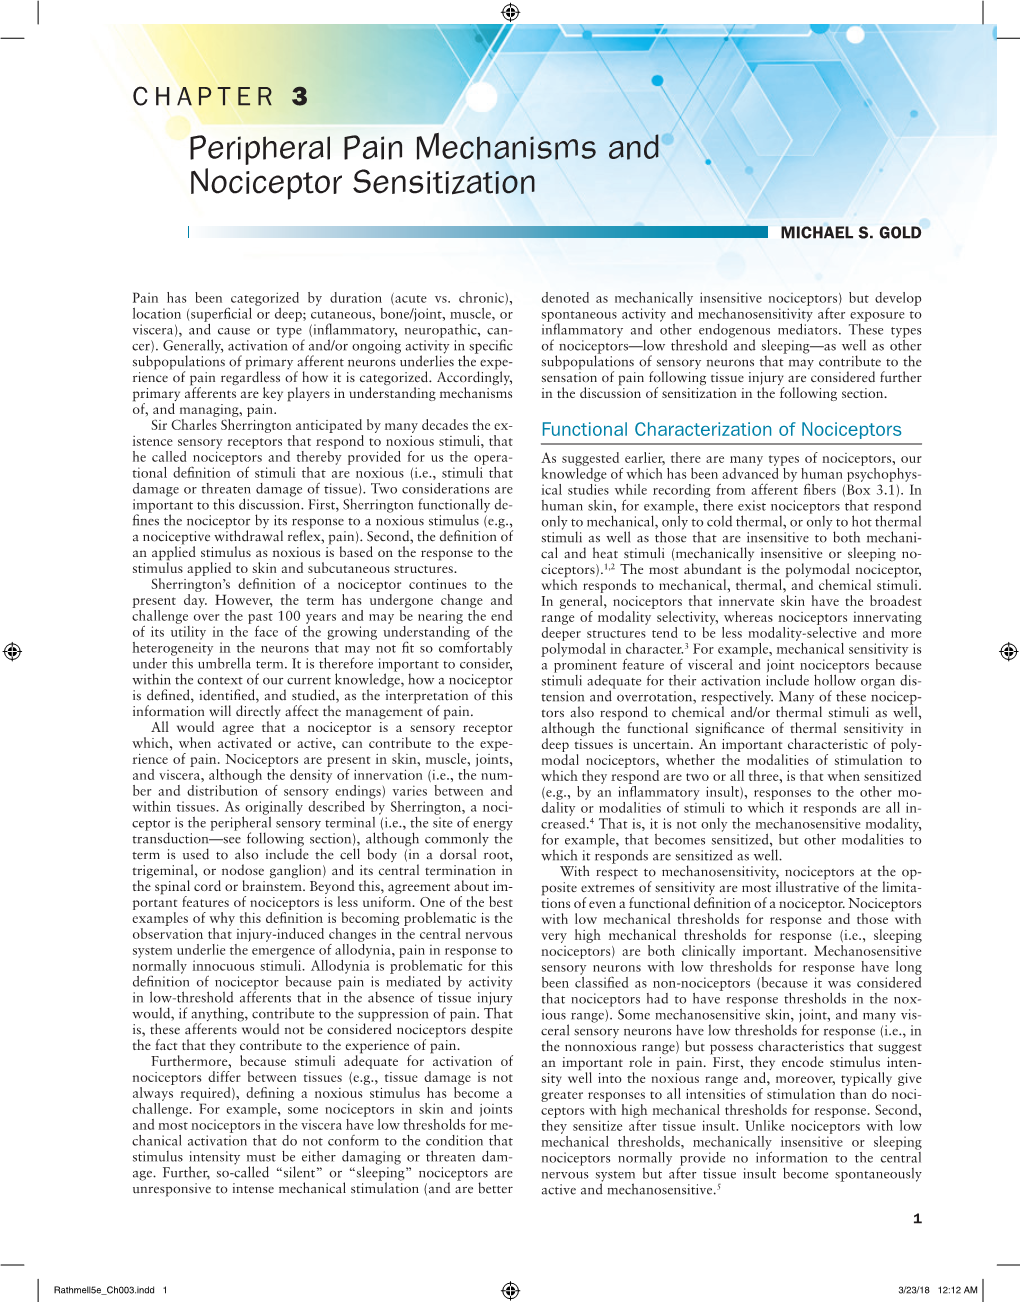 Peripheral Pain Mechanisms and Nociceptor Sensitization